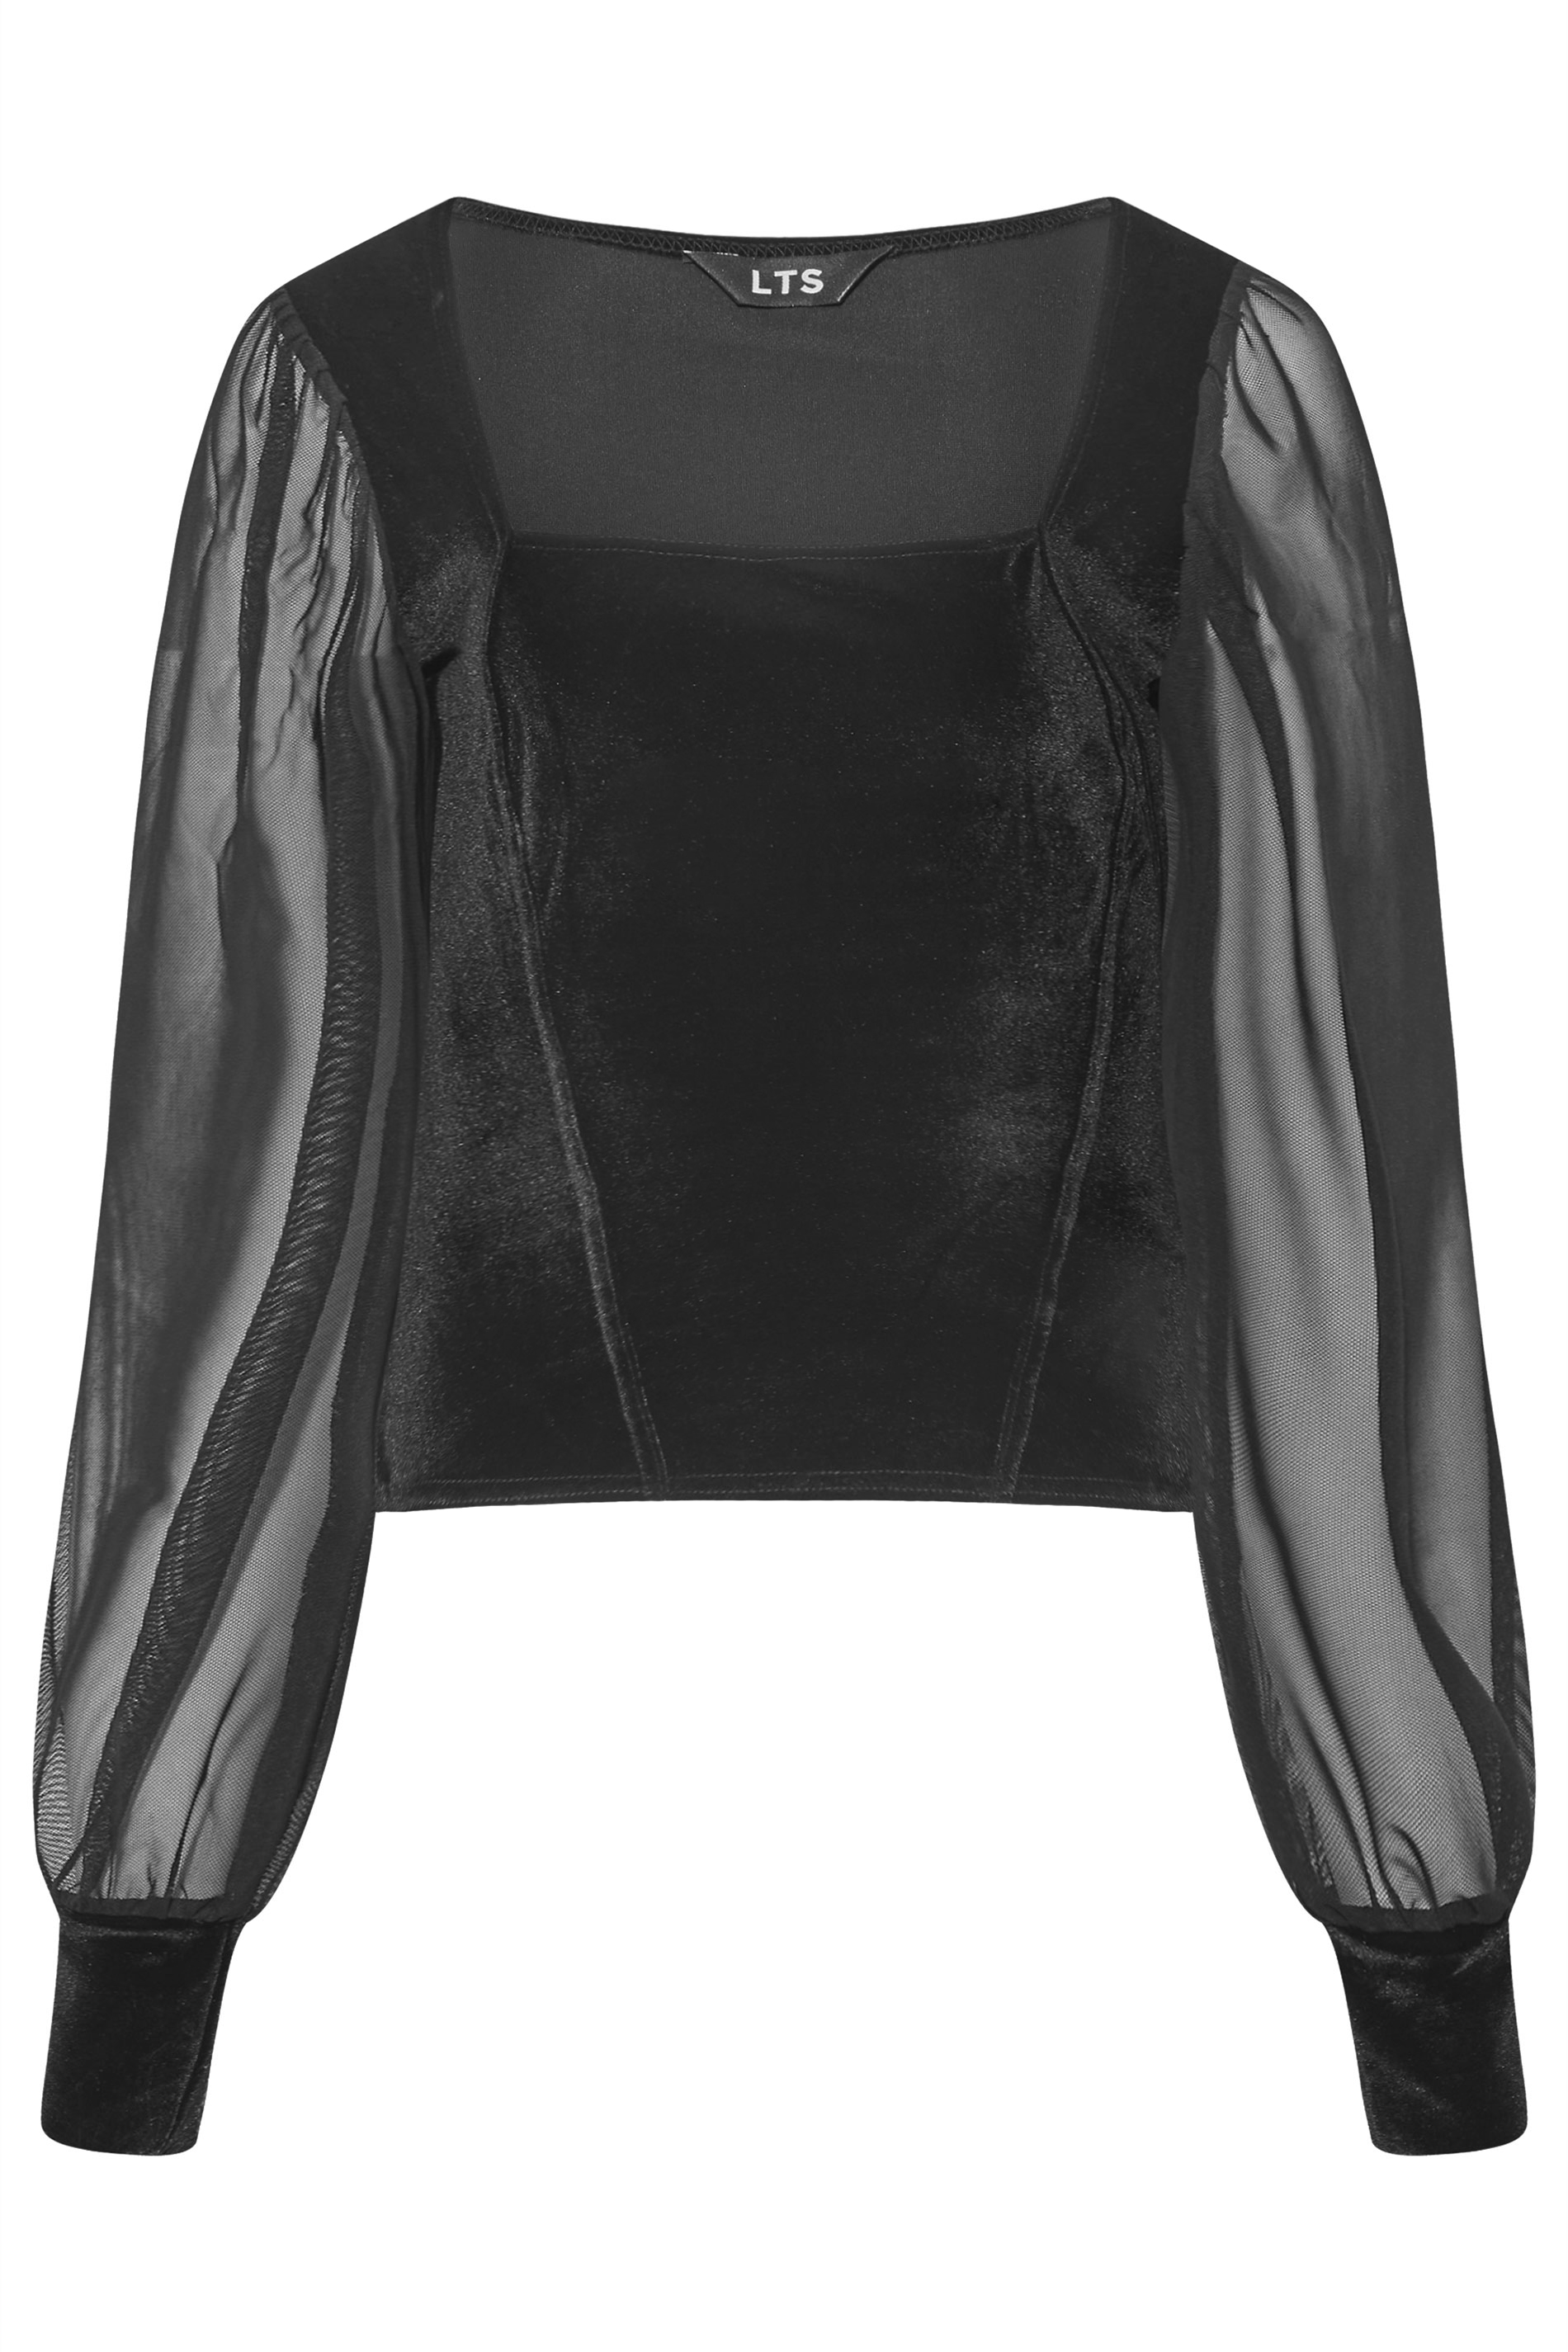 LTS Tall Women's Black Velvet & Mesh Long Sleeve Corset Top | Long Tall ...